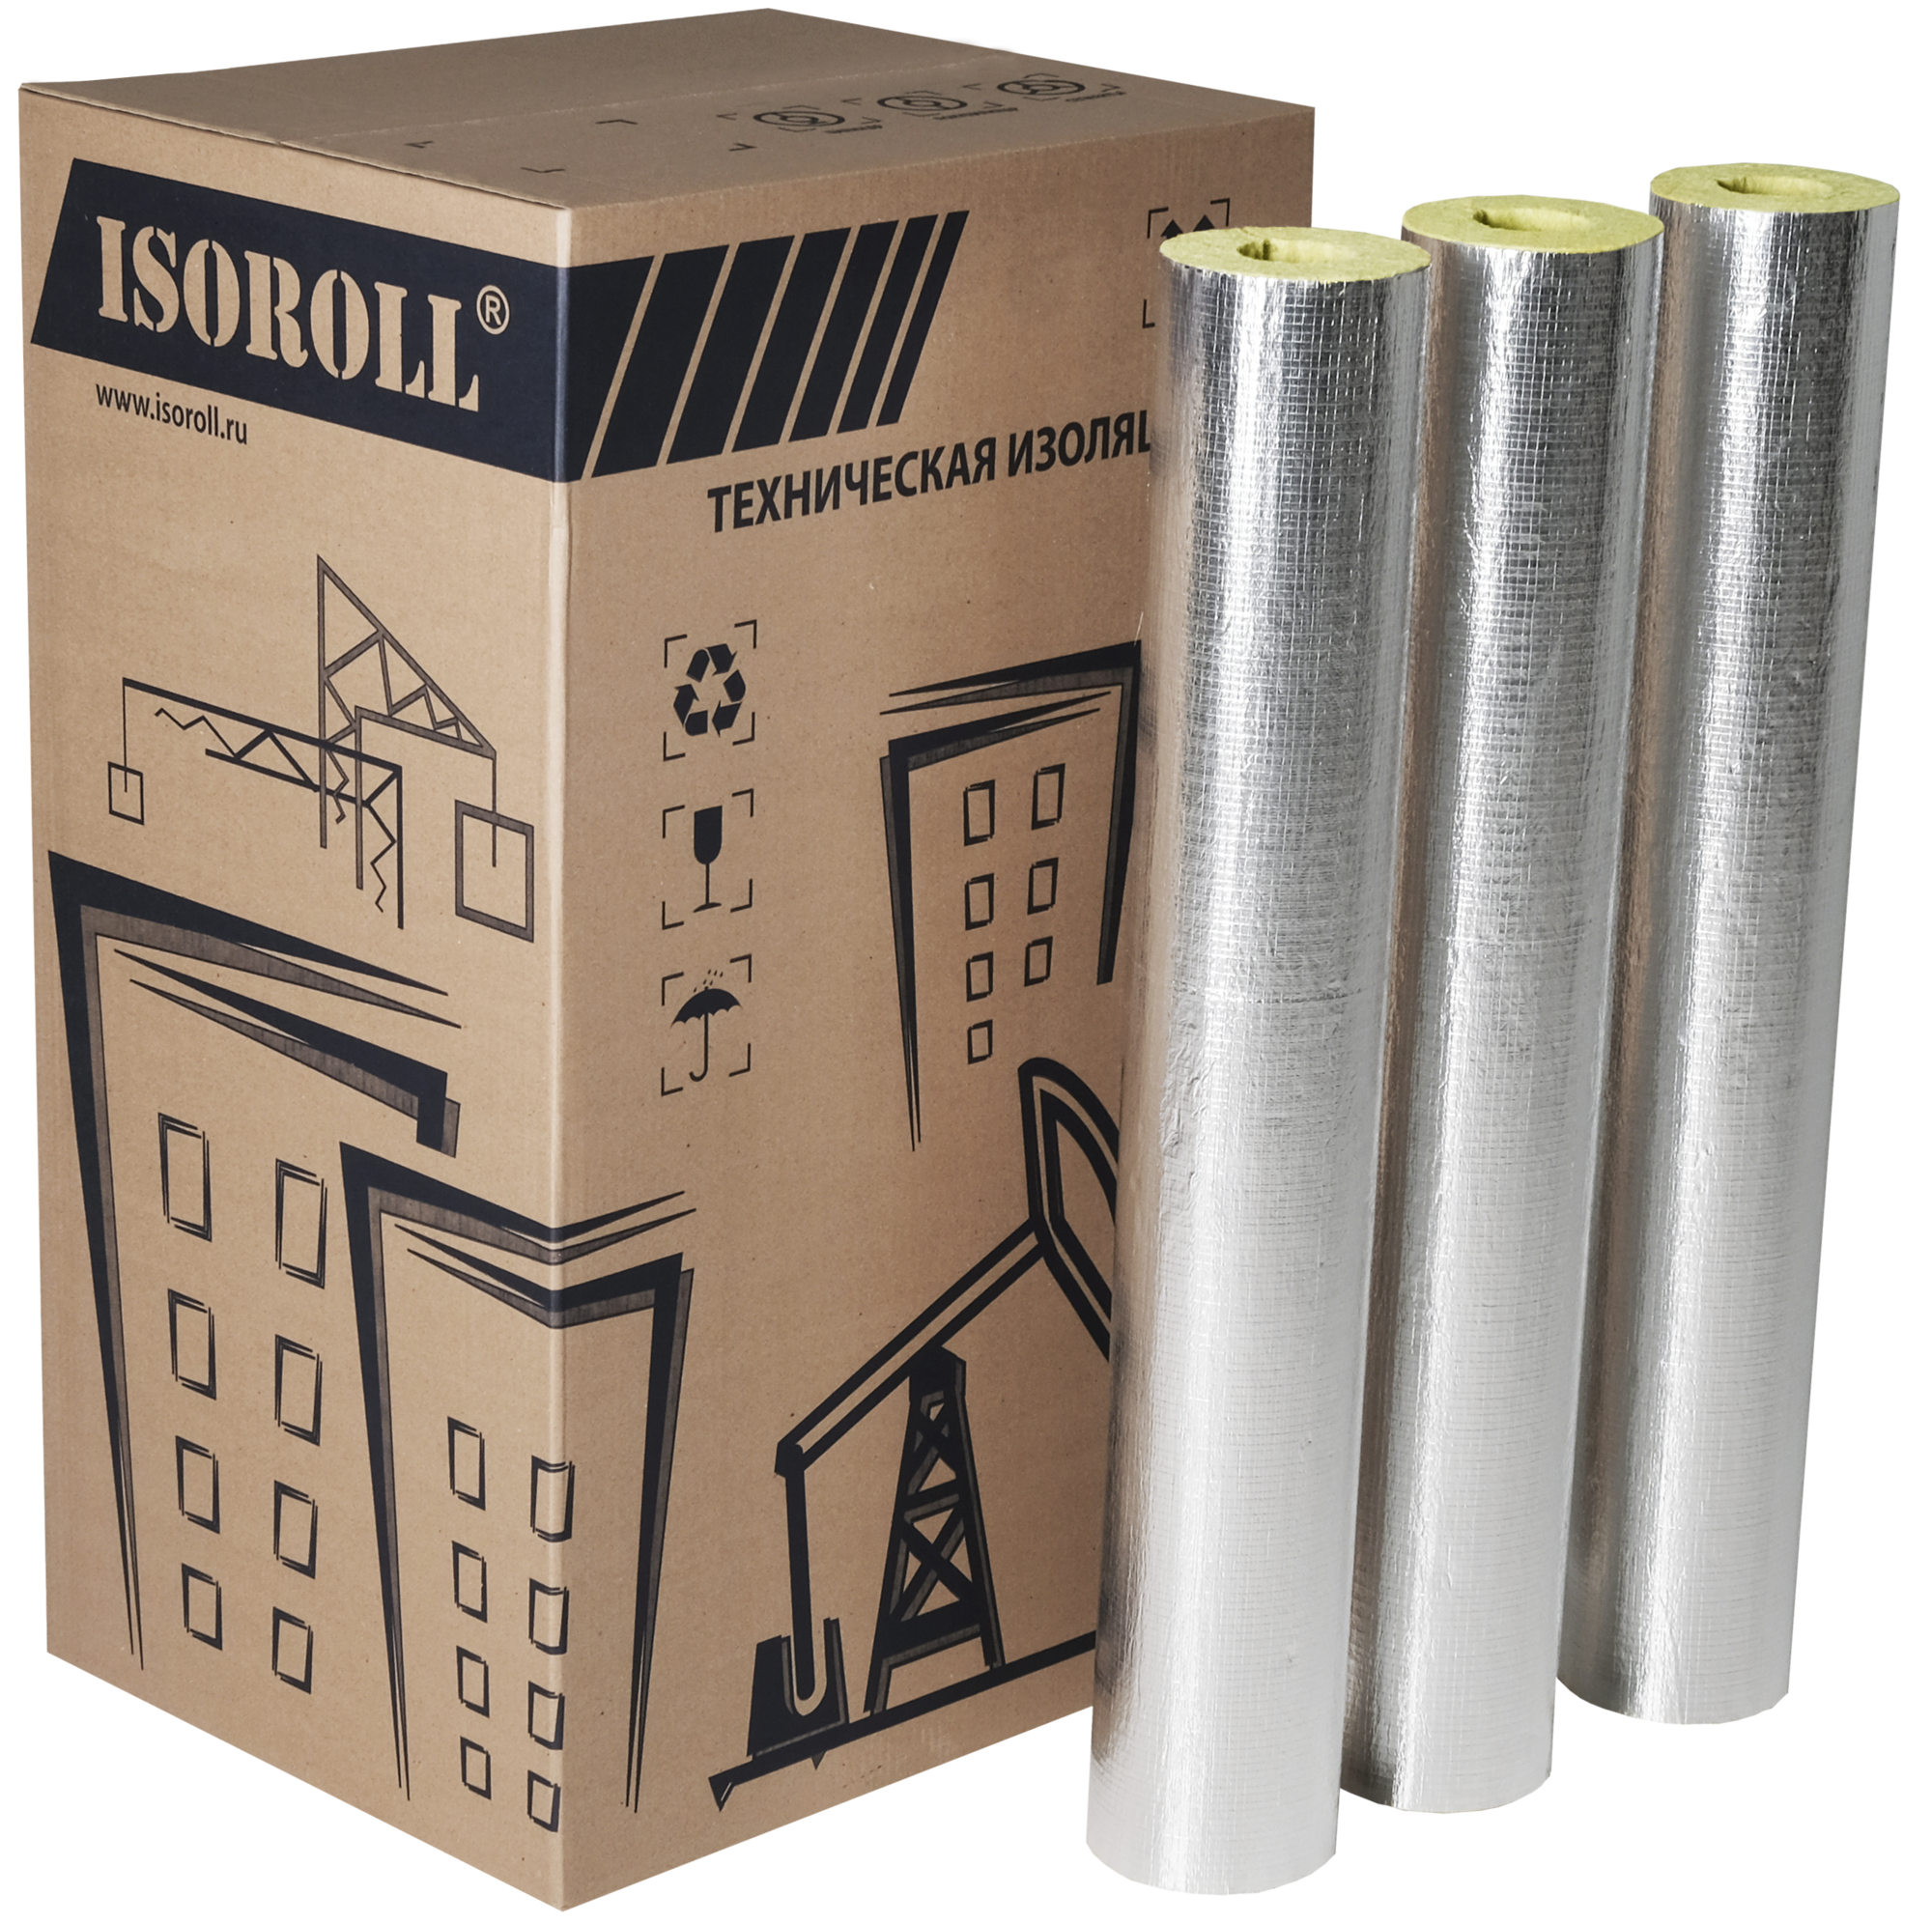 Цилиндр теплоизоляционный Isoroll® с технической фольгой НГ для труб 159 мм x 80 мм